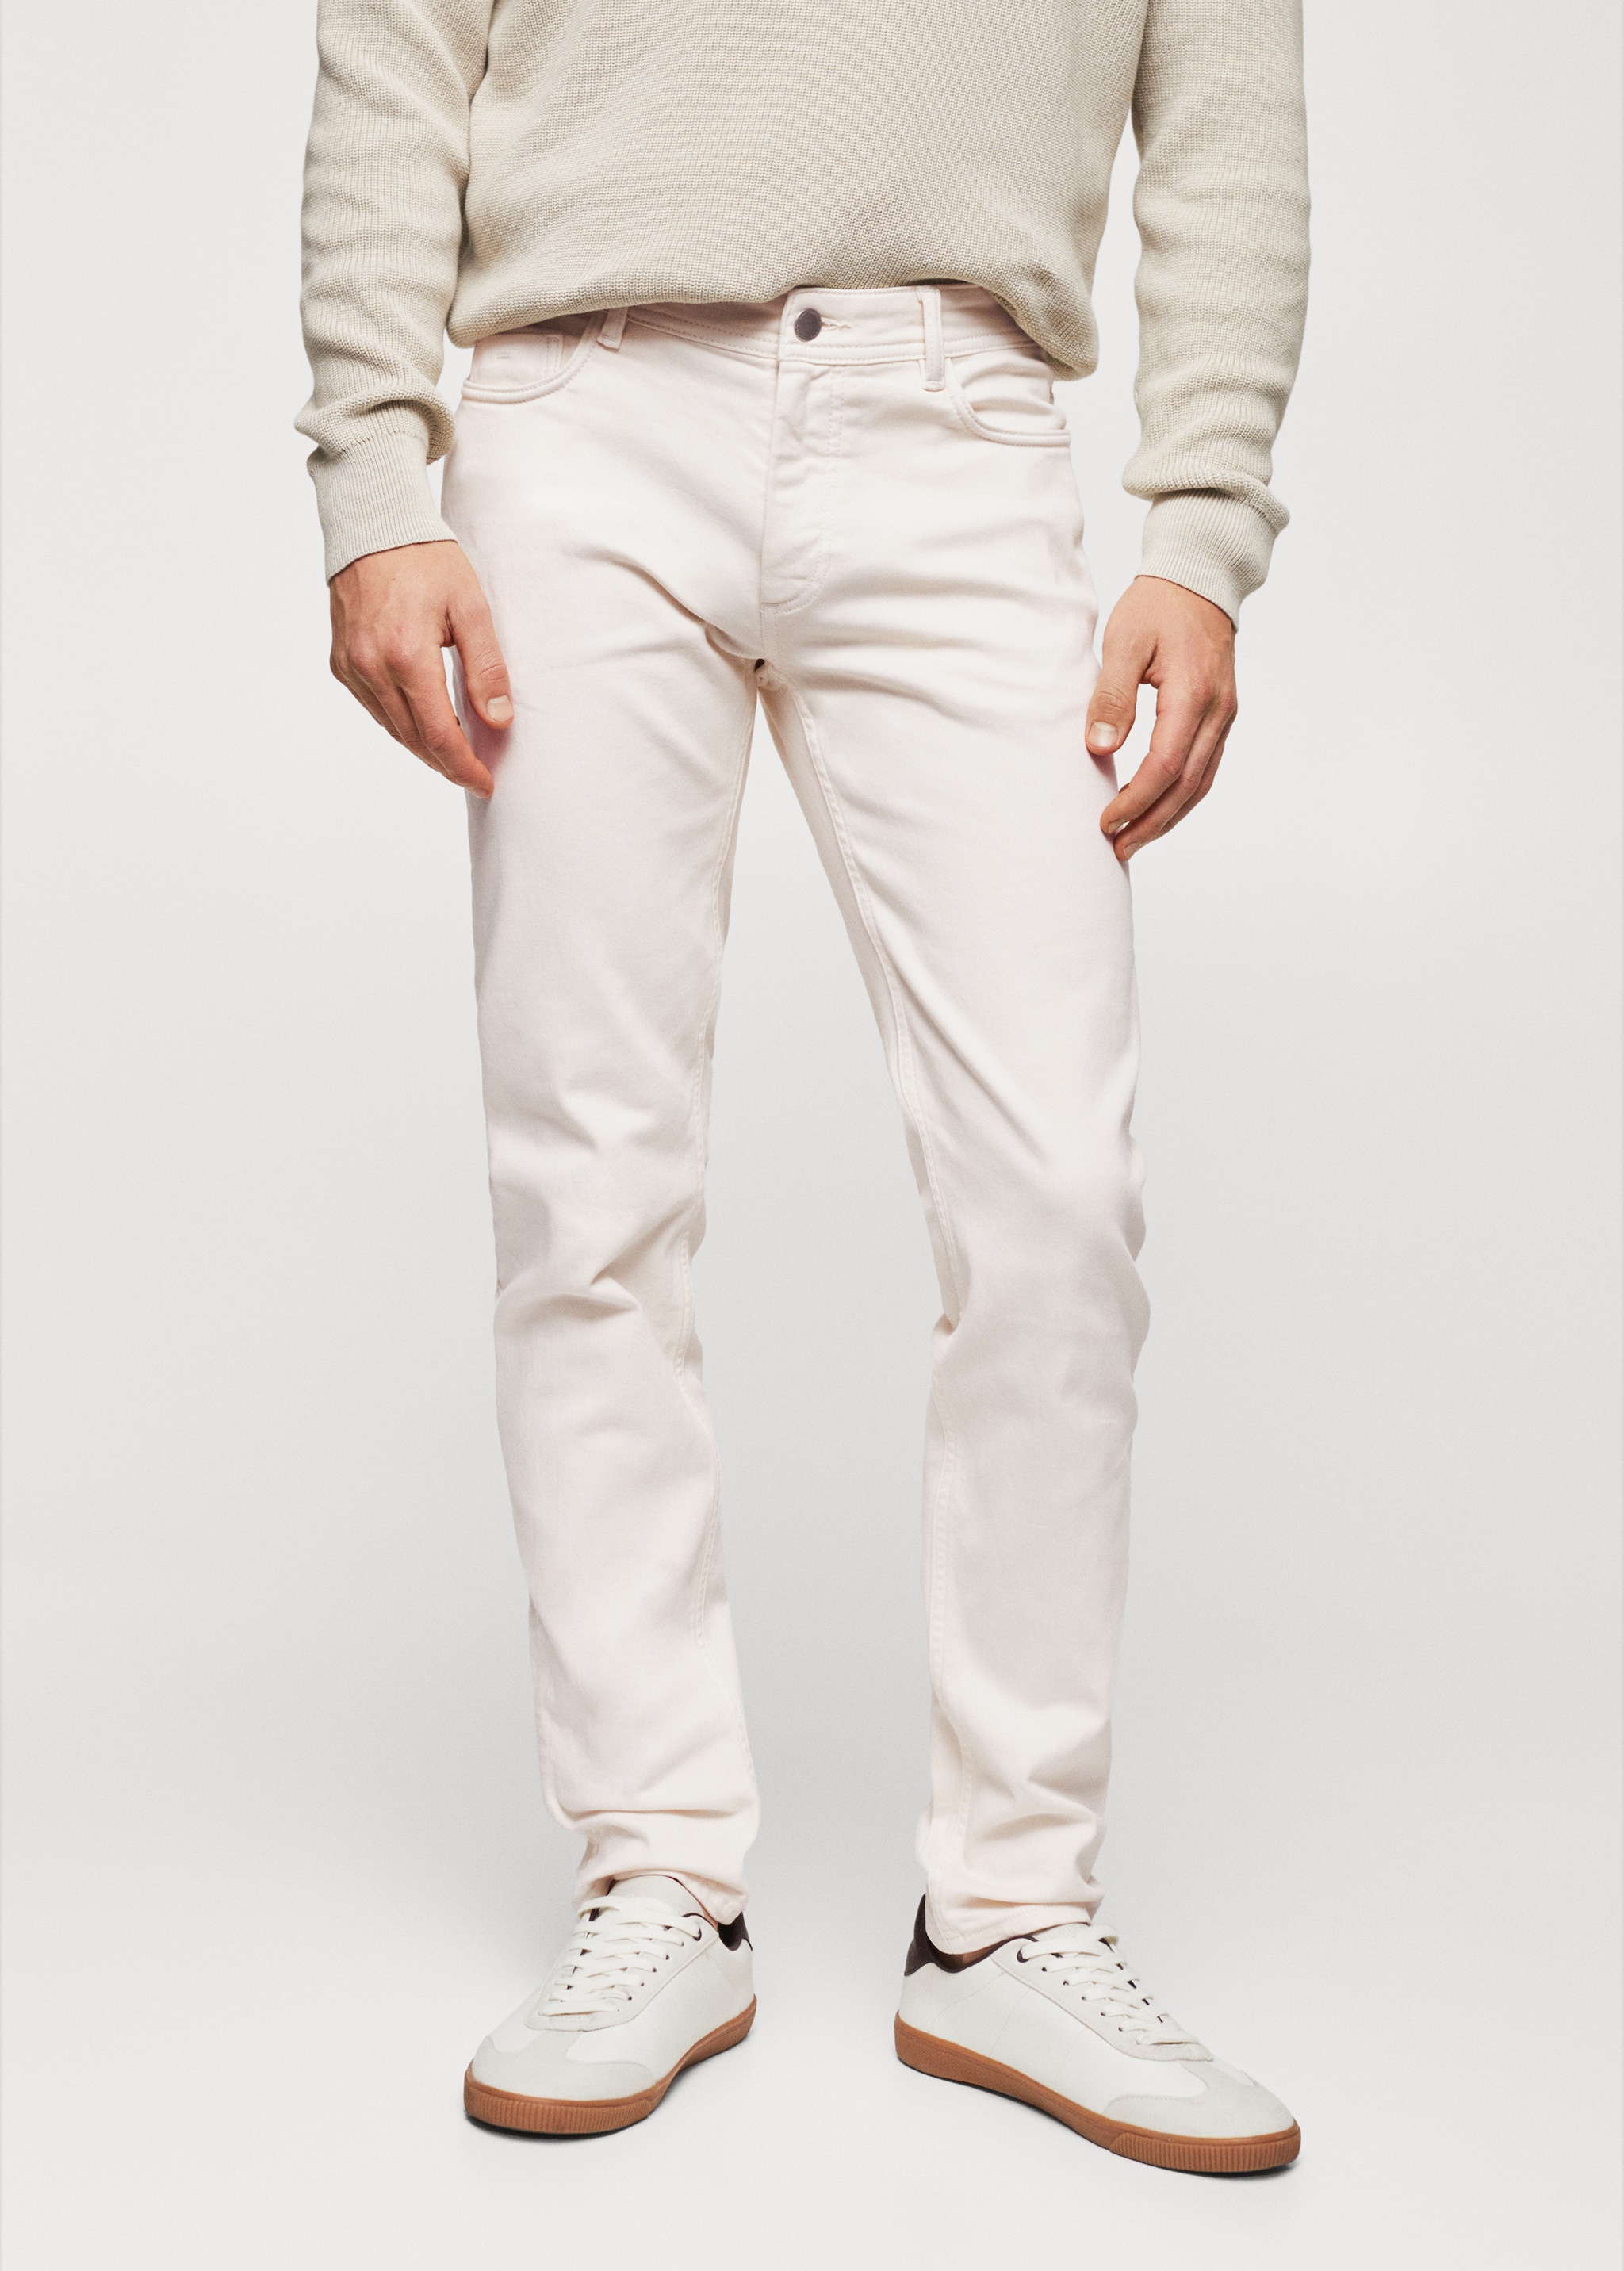 Jeans slim fit color - Plano medio